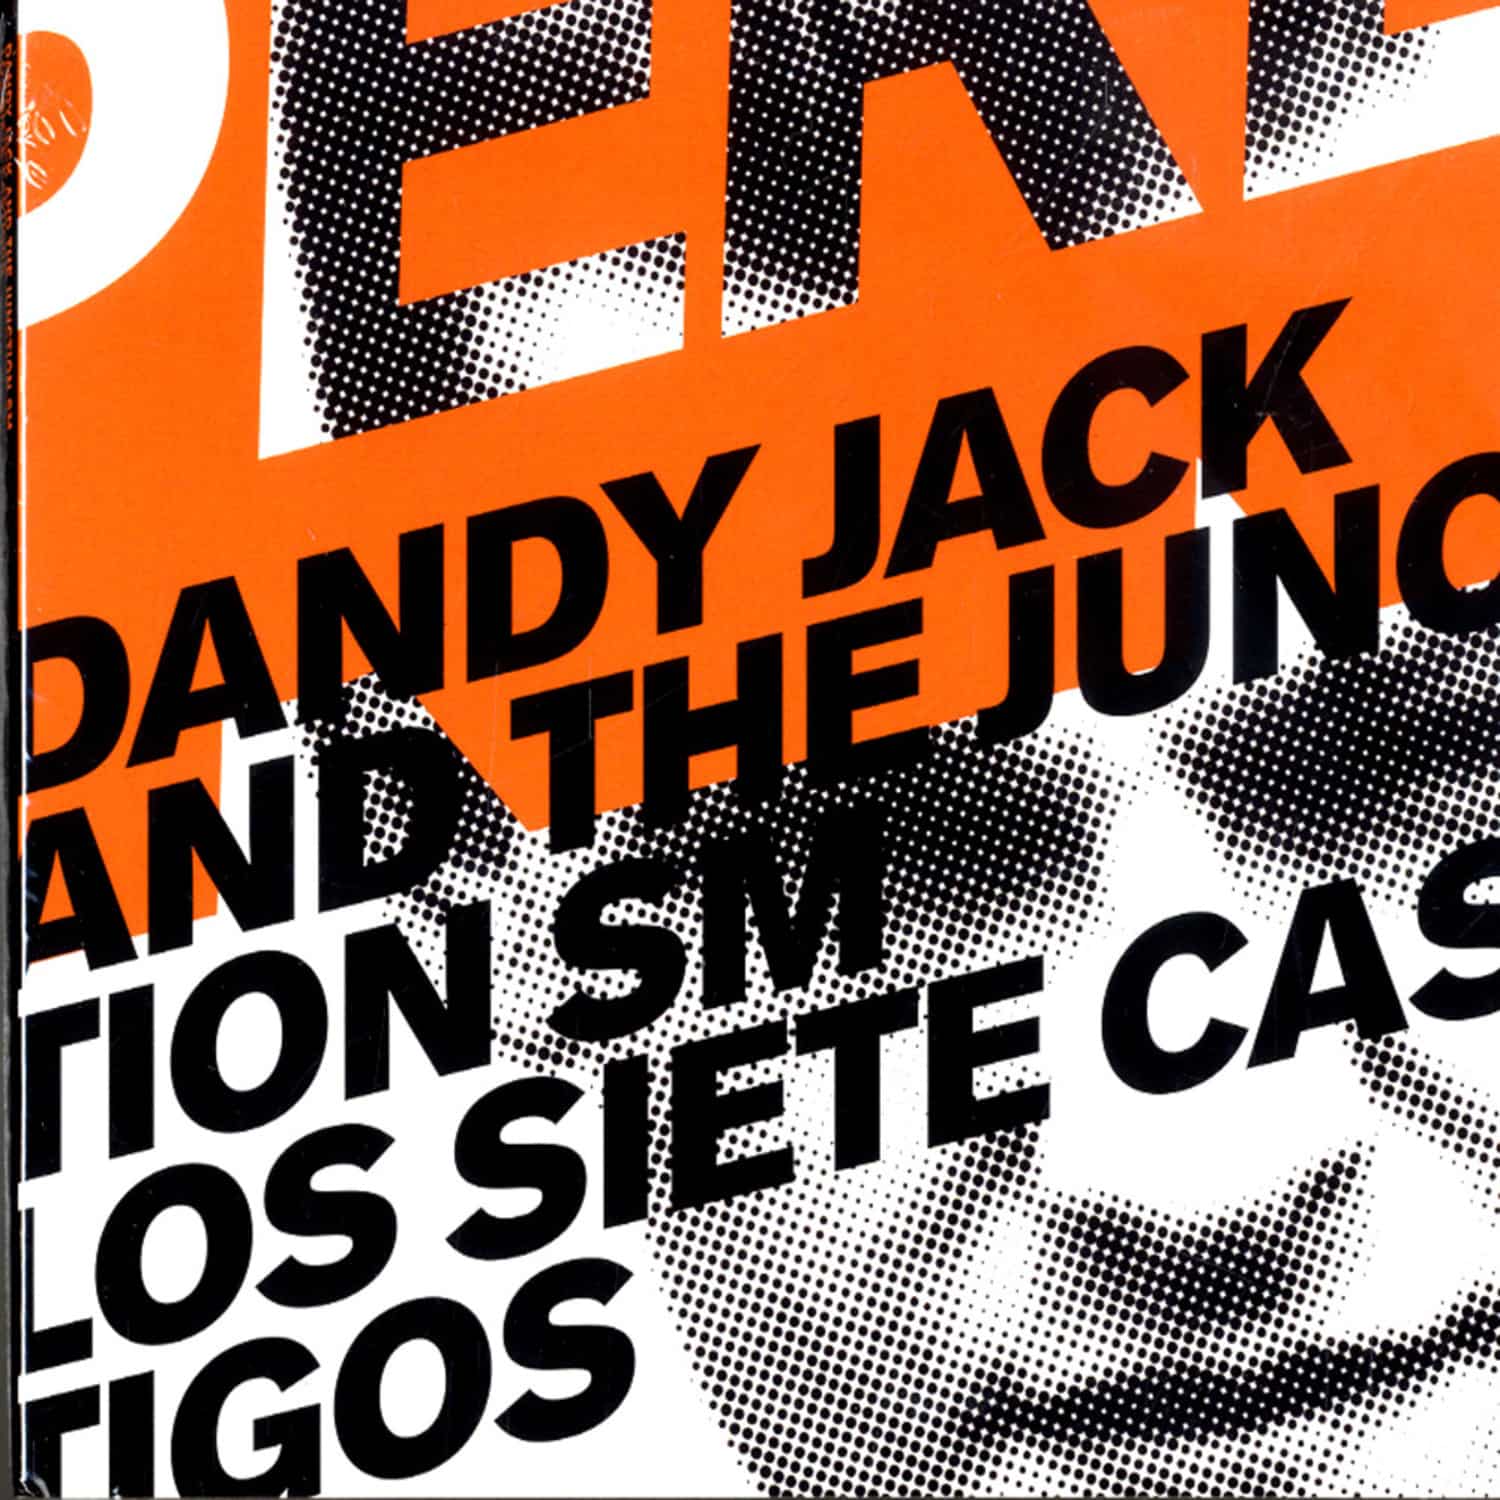 Dandy Jack And The Junotion SM - LOS SIETE CASTIGOS 